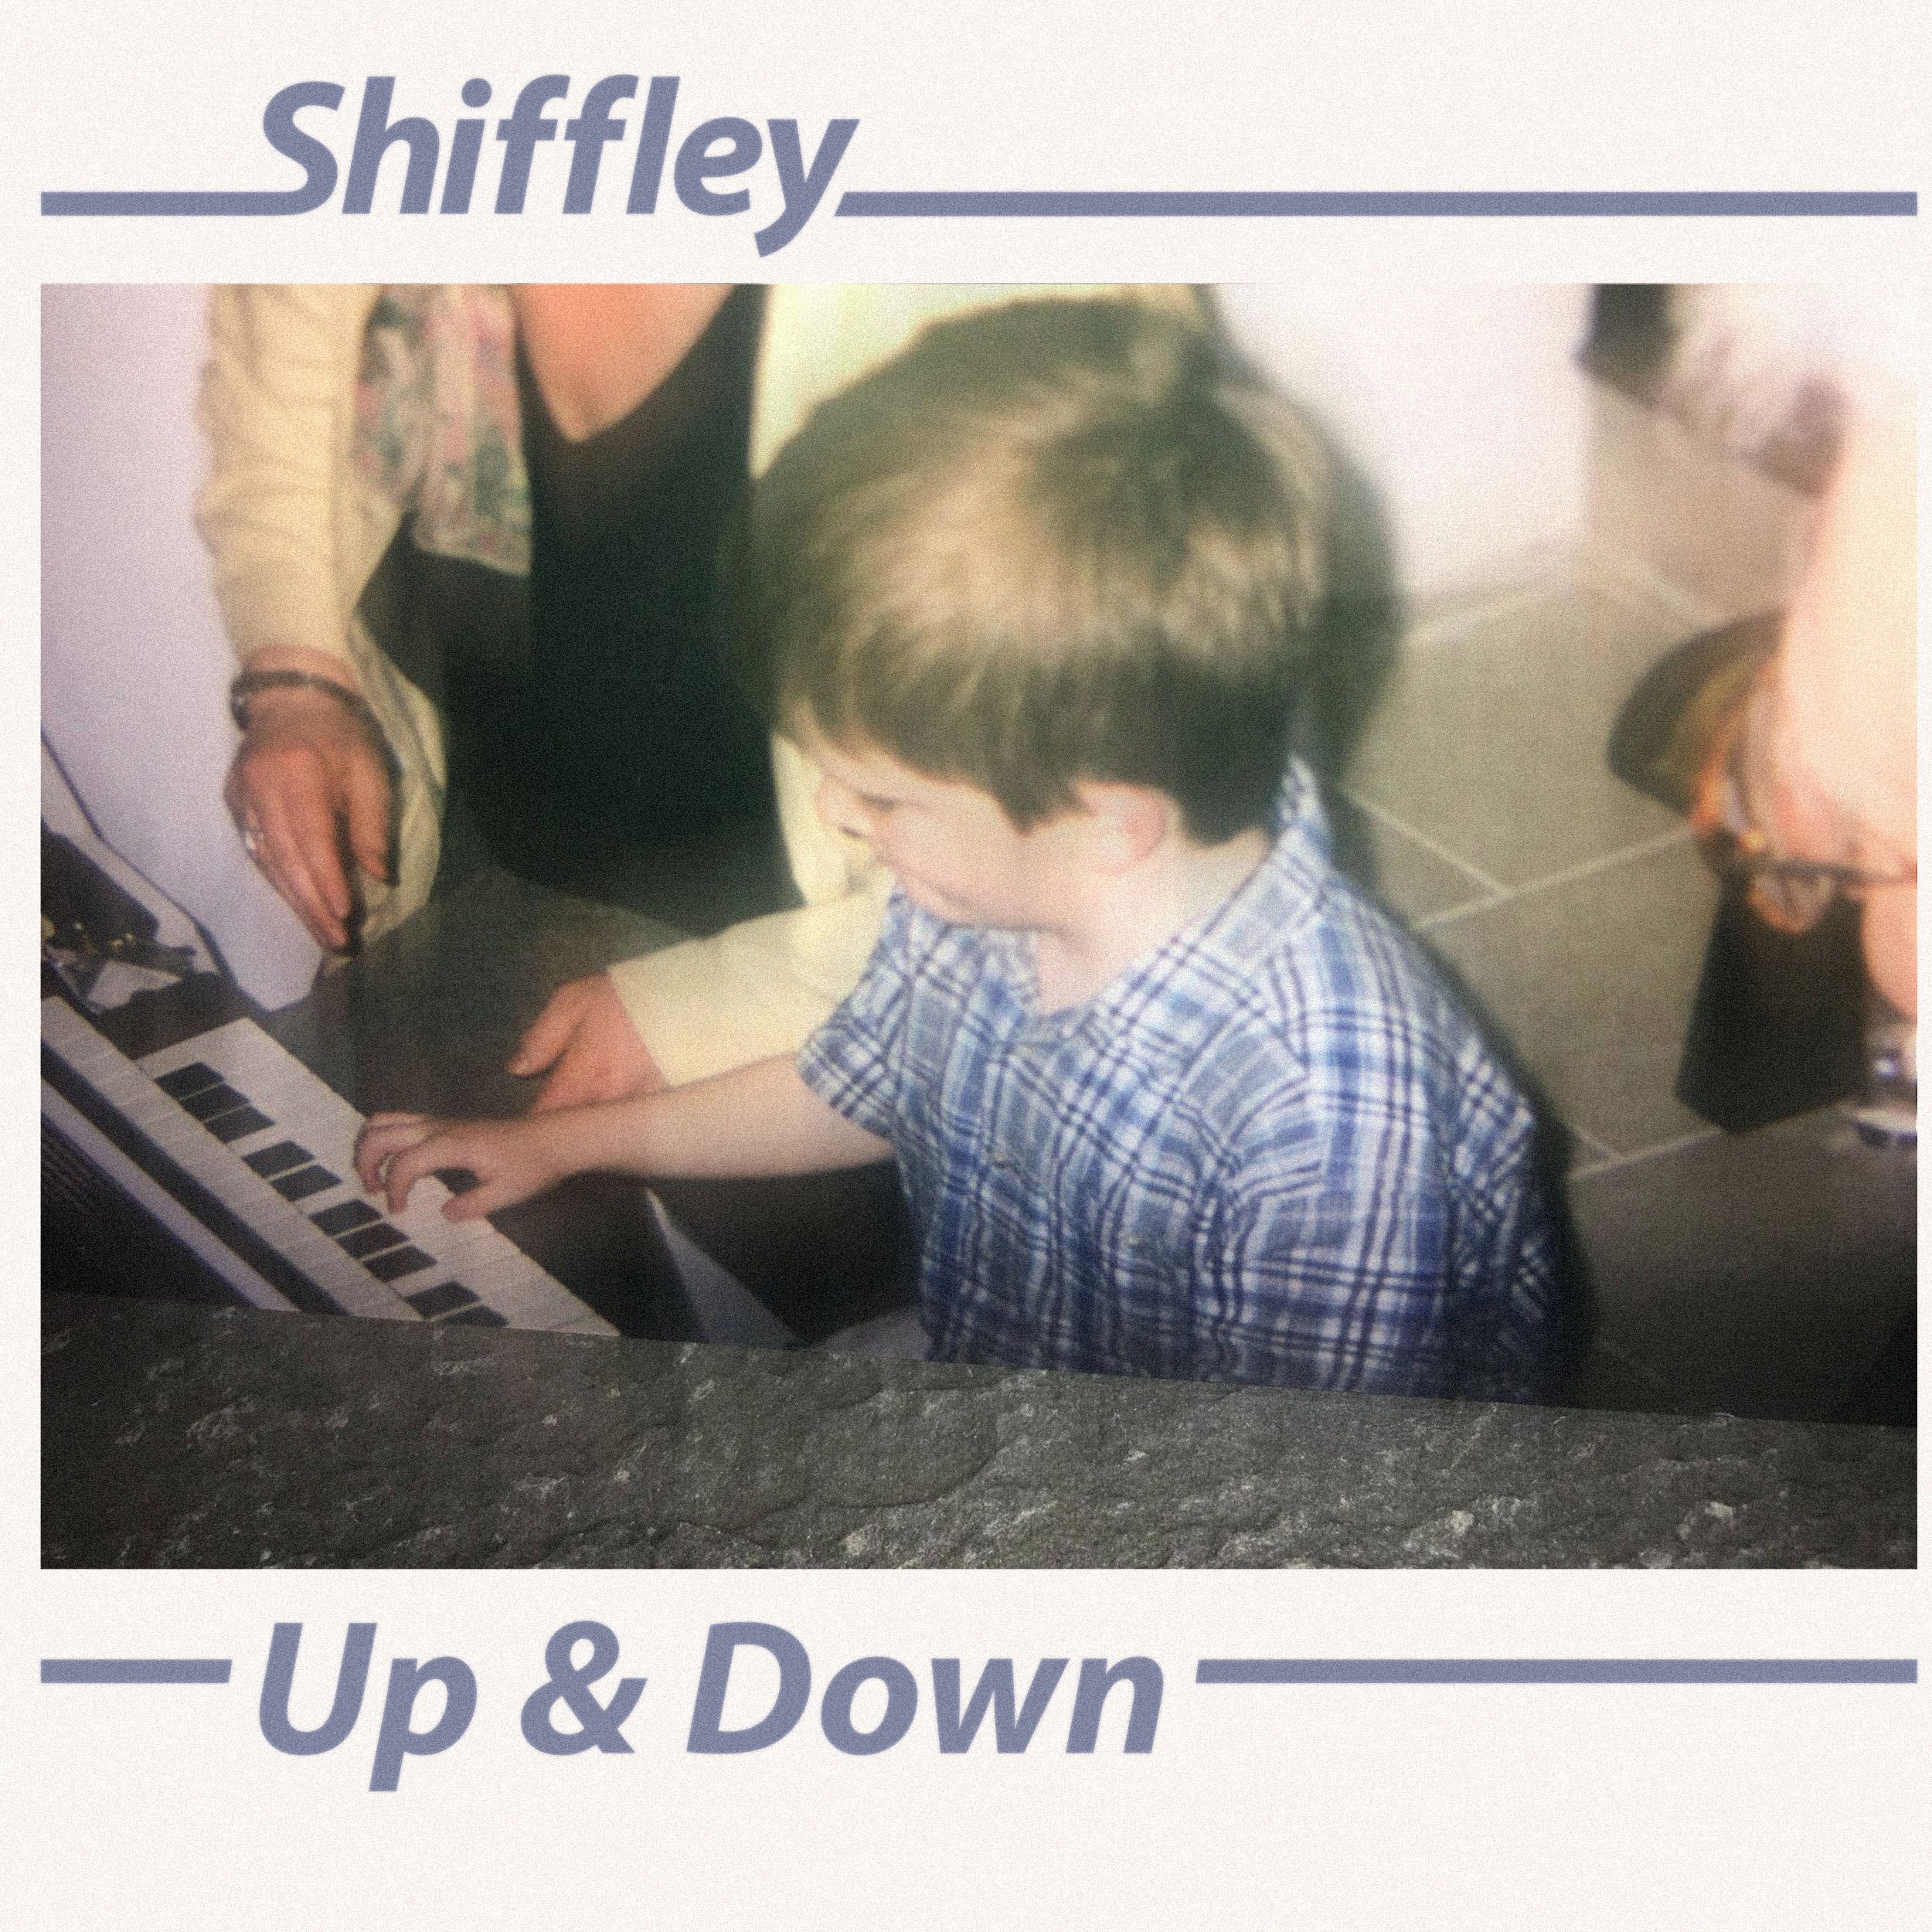 Shiffley – “Up & Down”